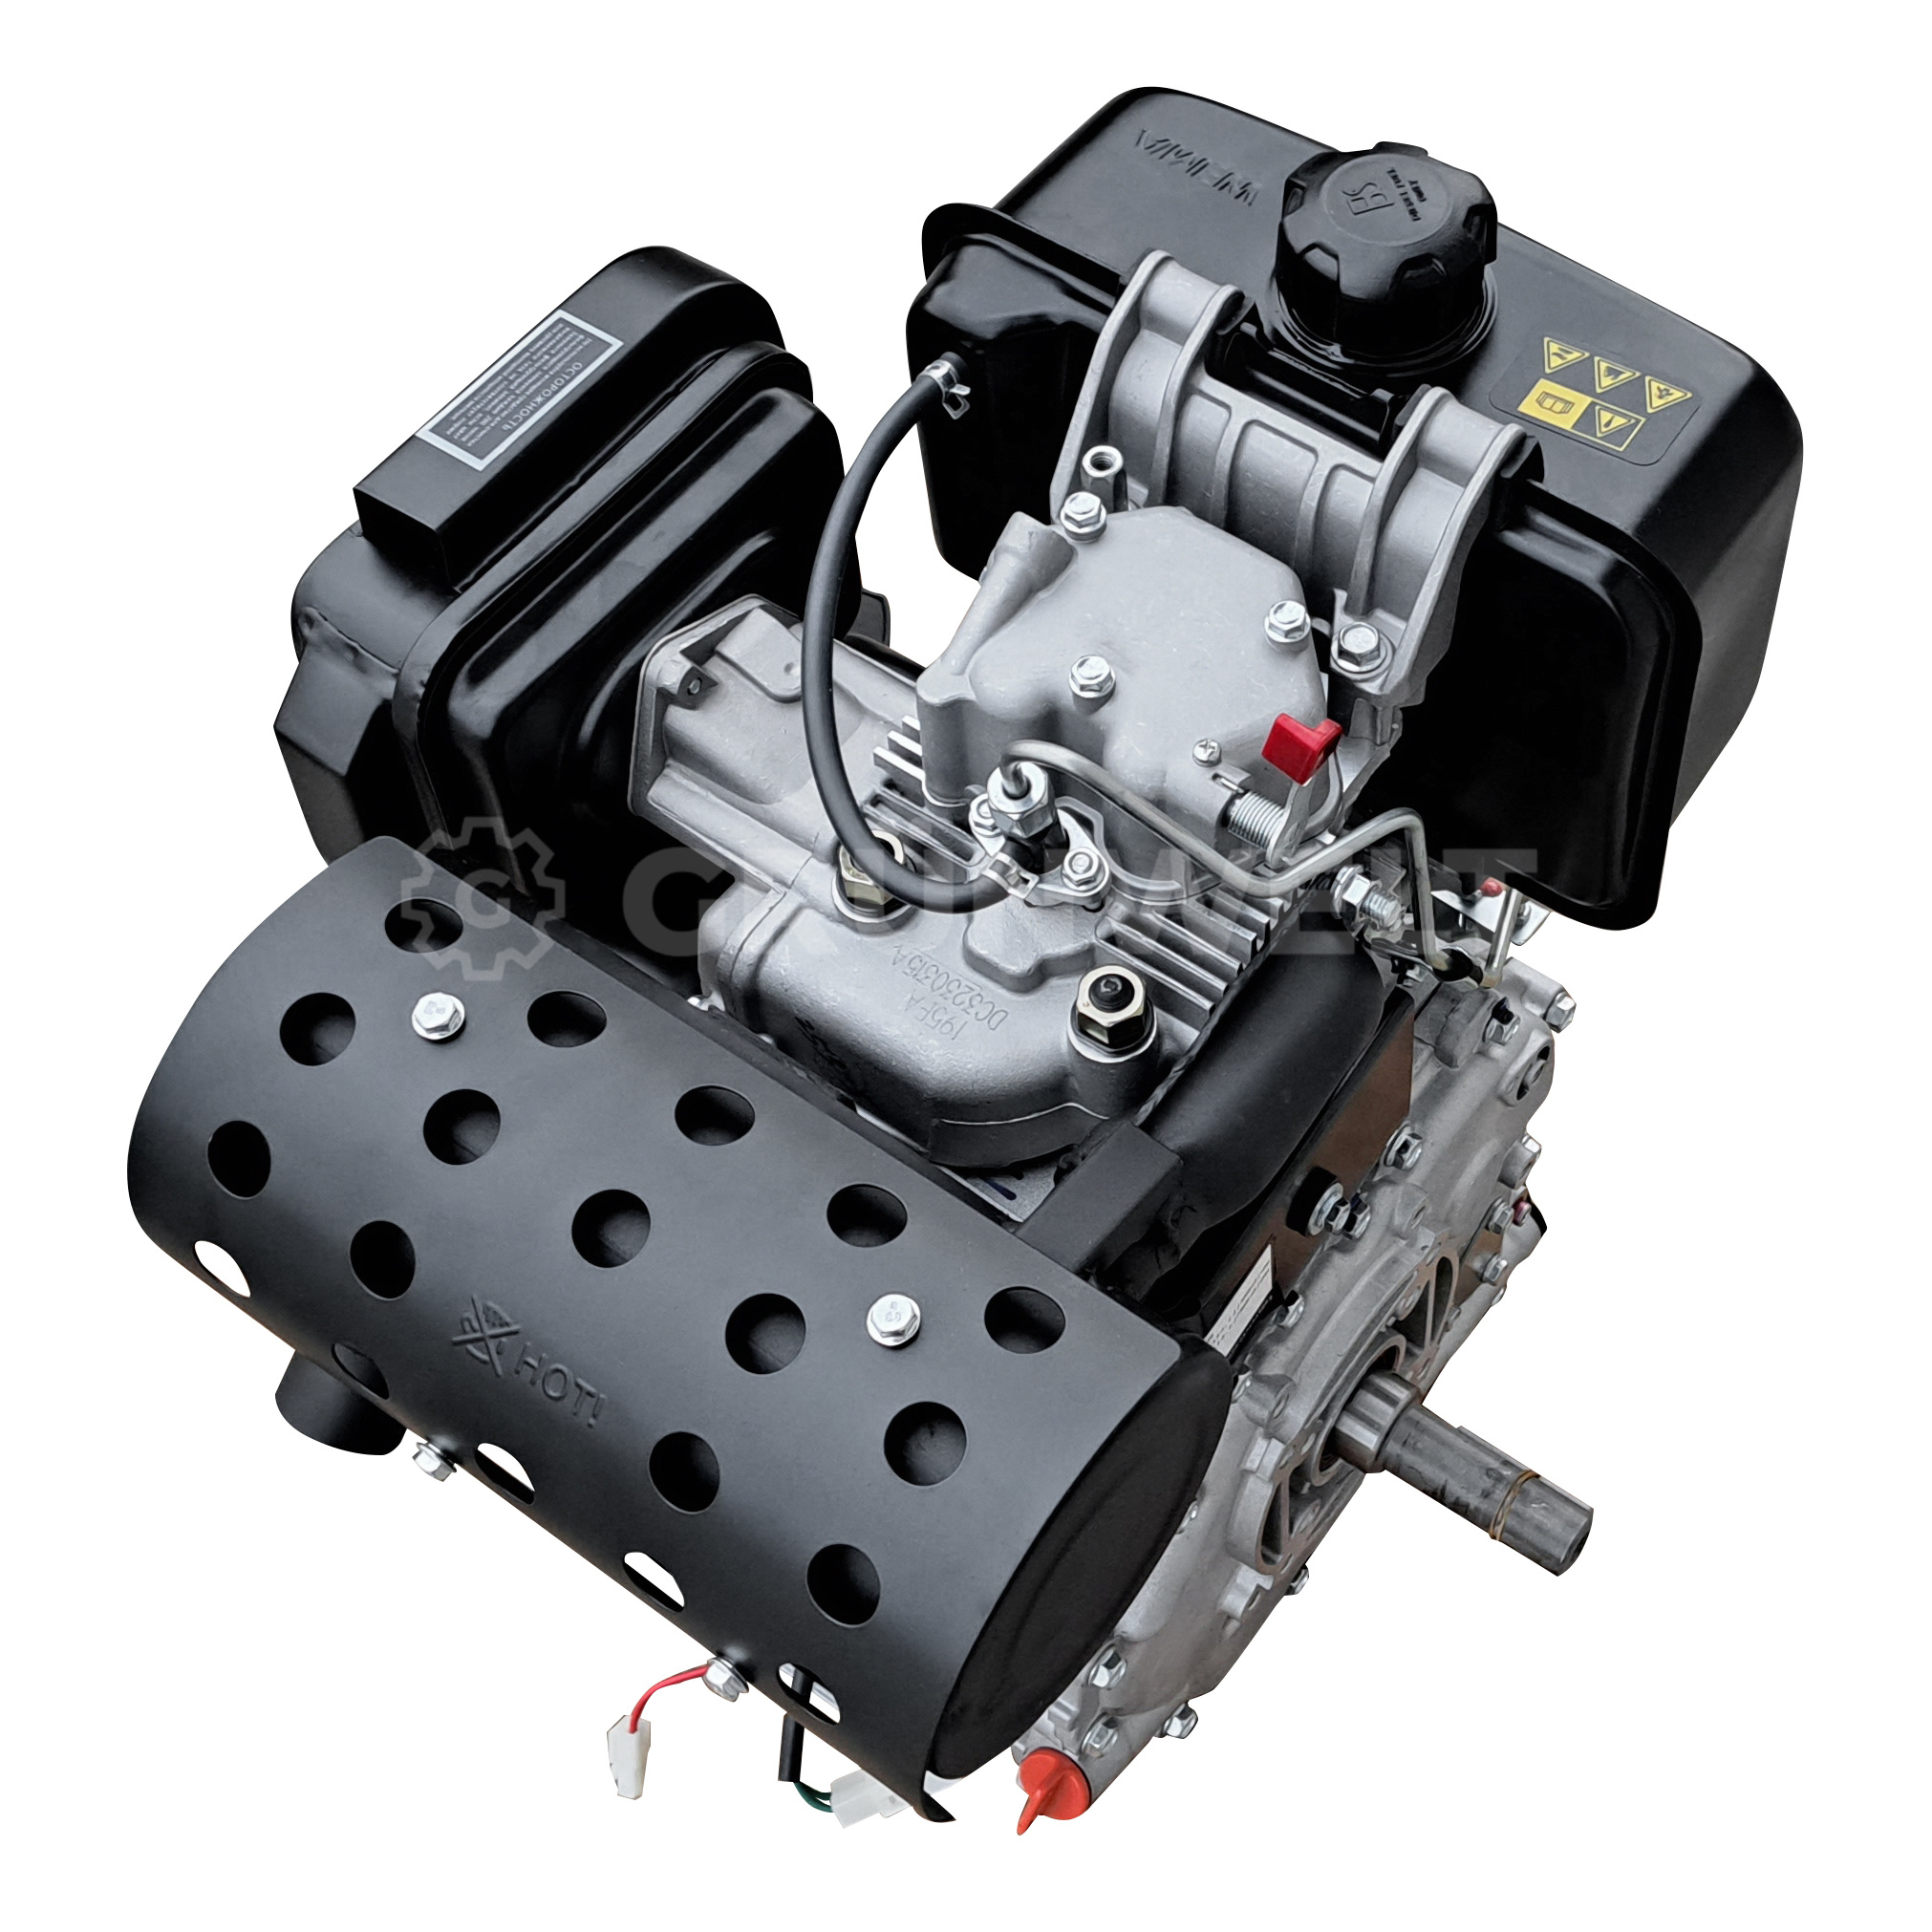 Dieselmotor Motor Standmotor E-Start 498cc 12PS Diesel Motor Welle